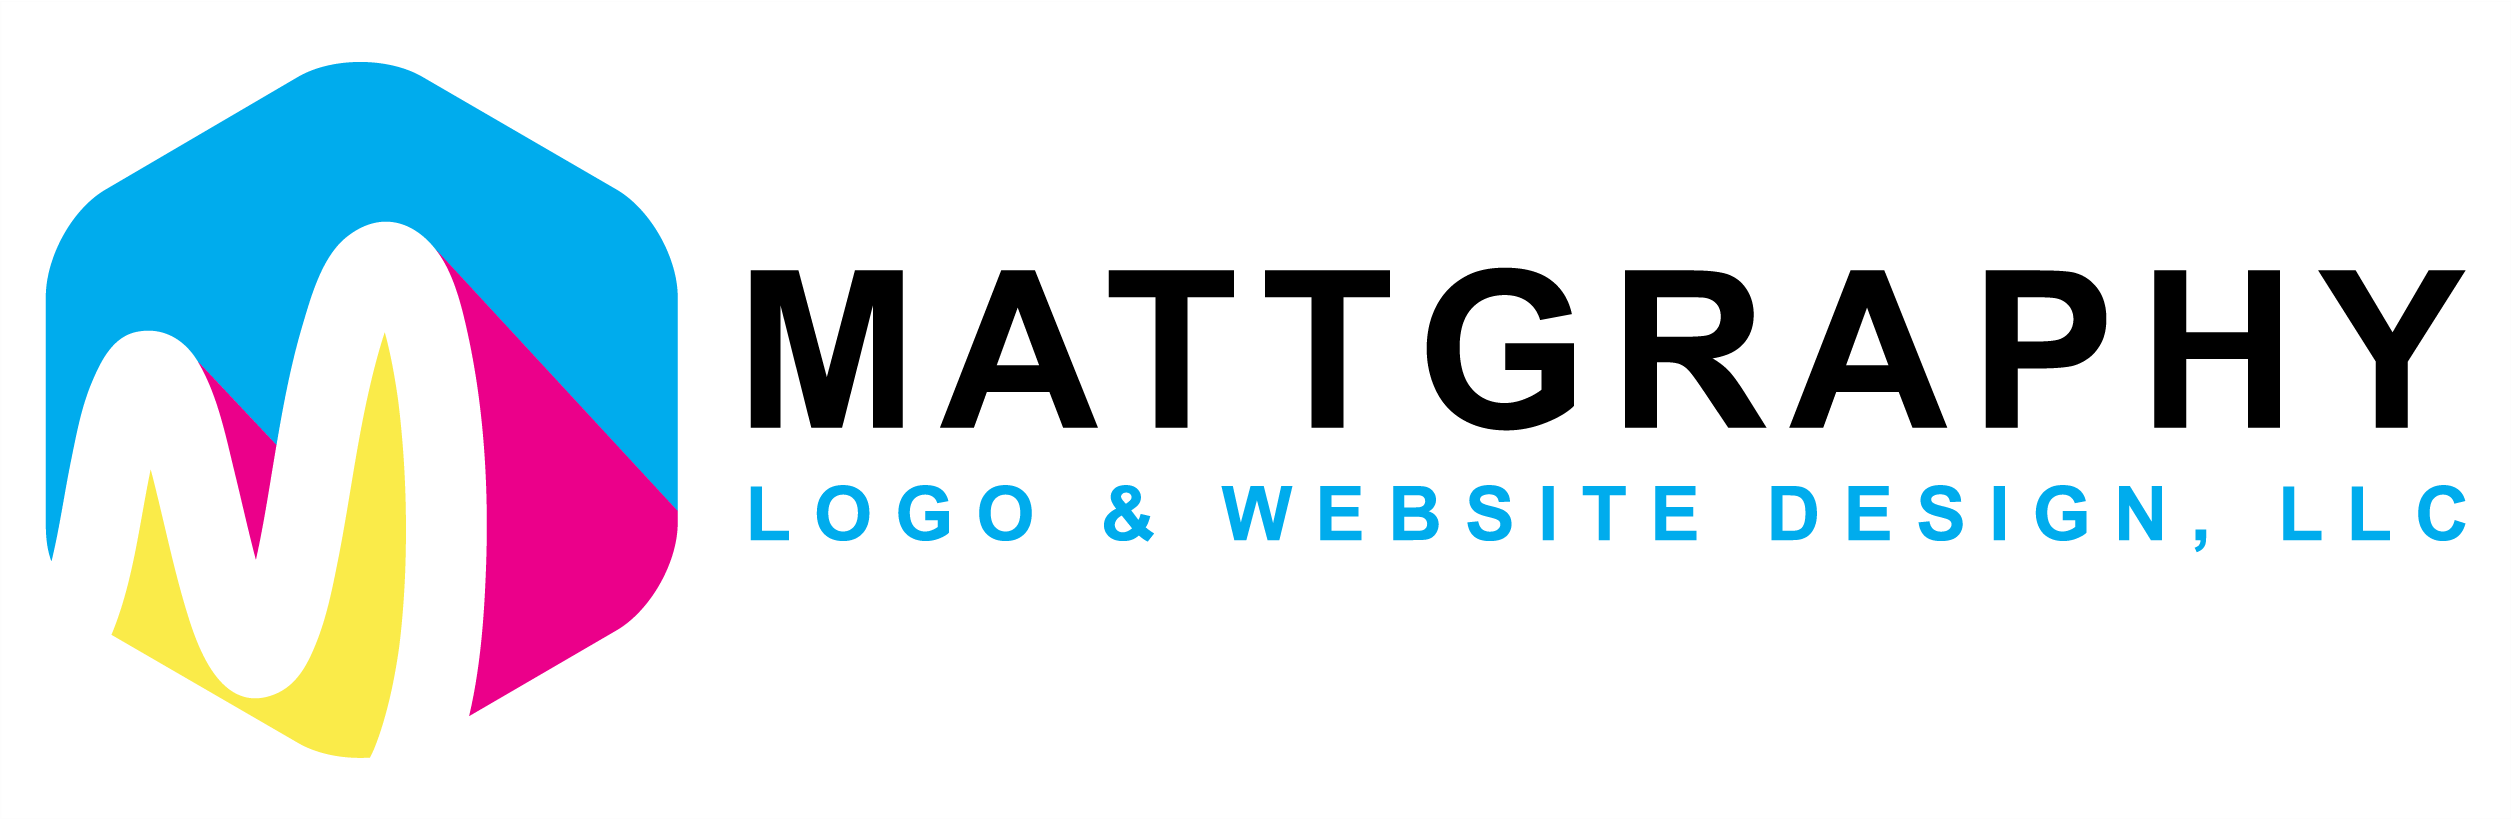 Mattgraphy Logo and Website Design, LLC